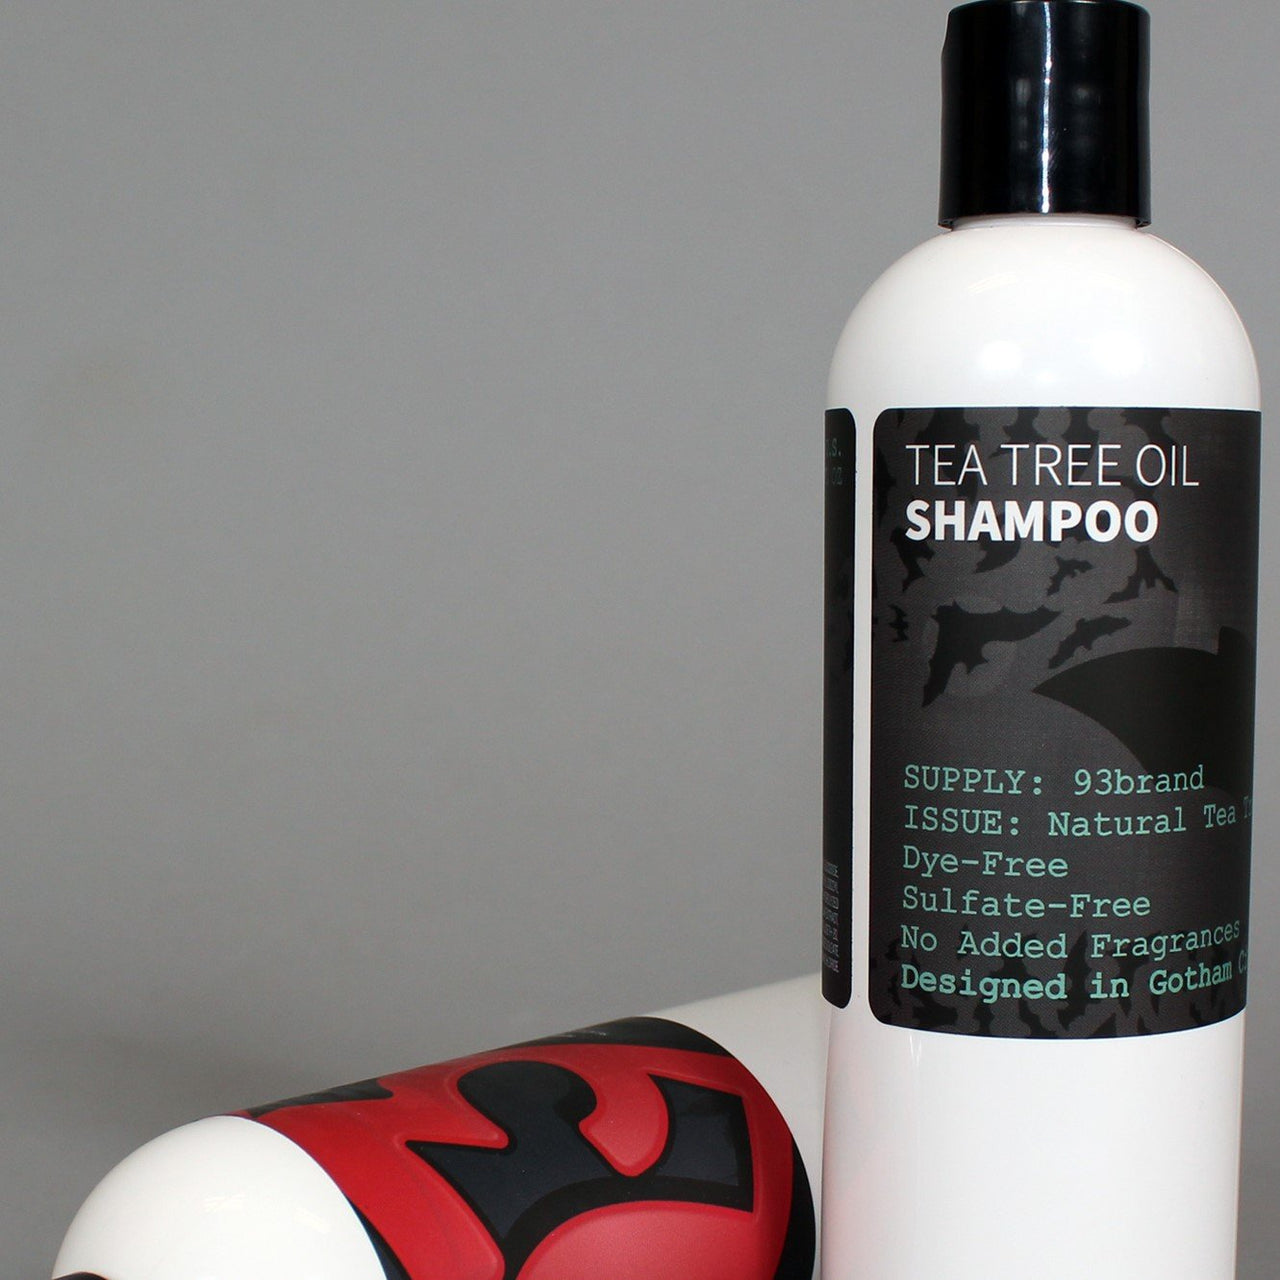 93brand Tea Tree Oil Shampoo 2-PACK *New Formula*